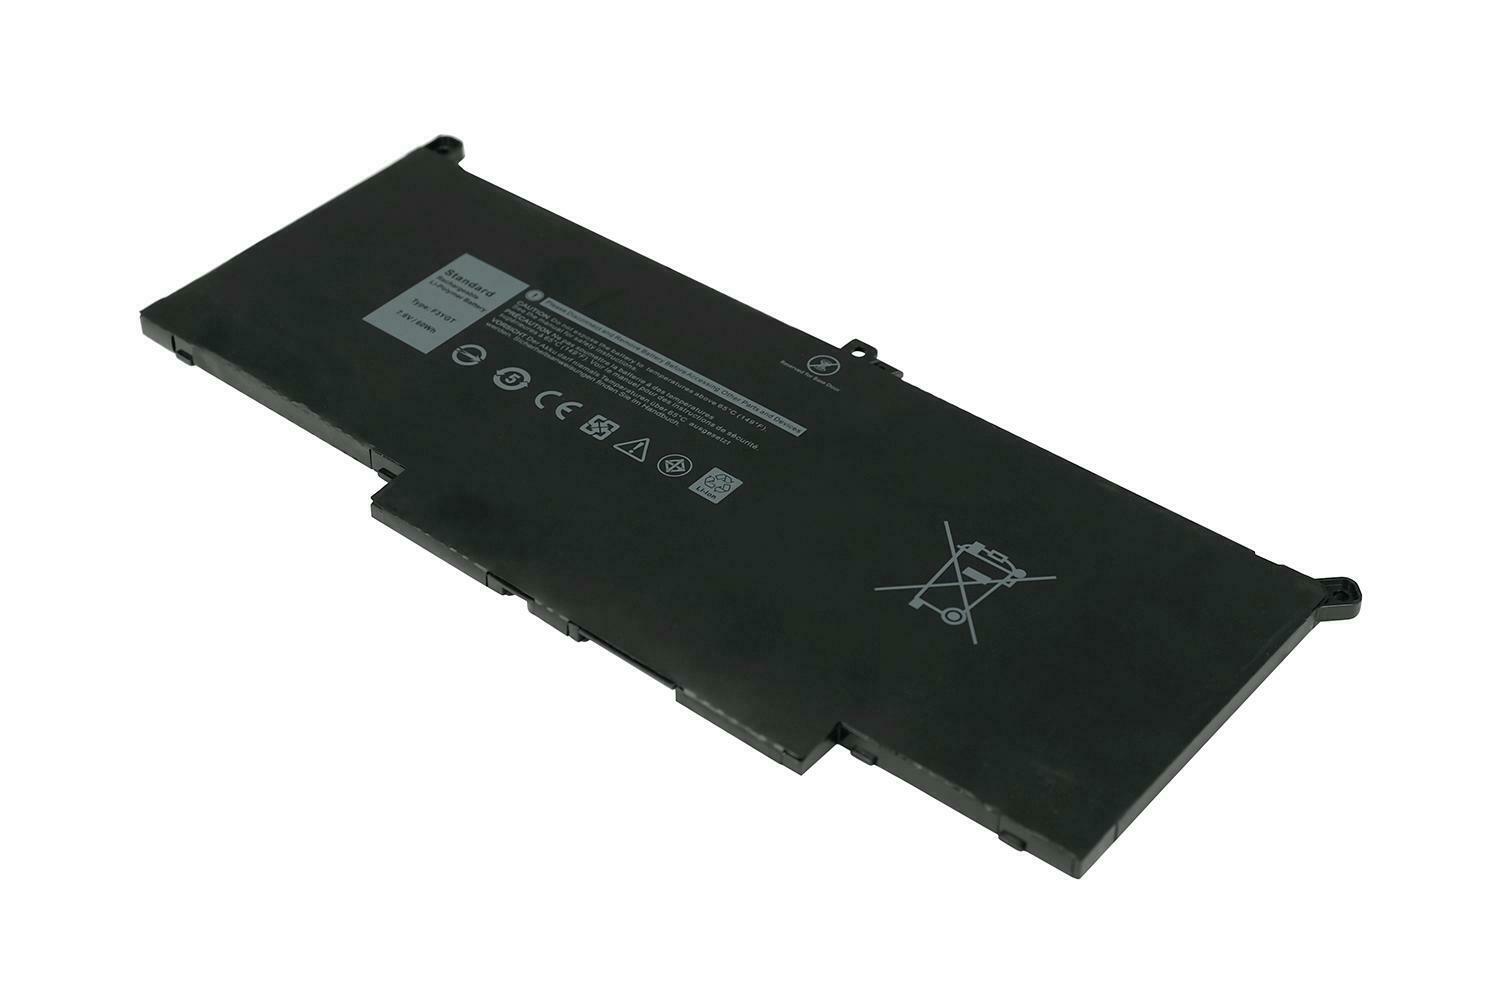 Dell Latitude 12 7000 7280 7480 DM3WC 0DM3WC 2X39G 7.6V F3YGT kompatibelt batterier